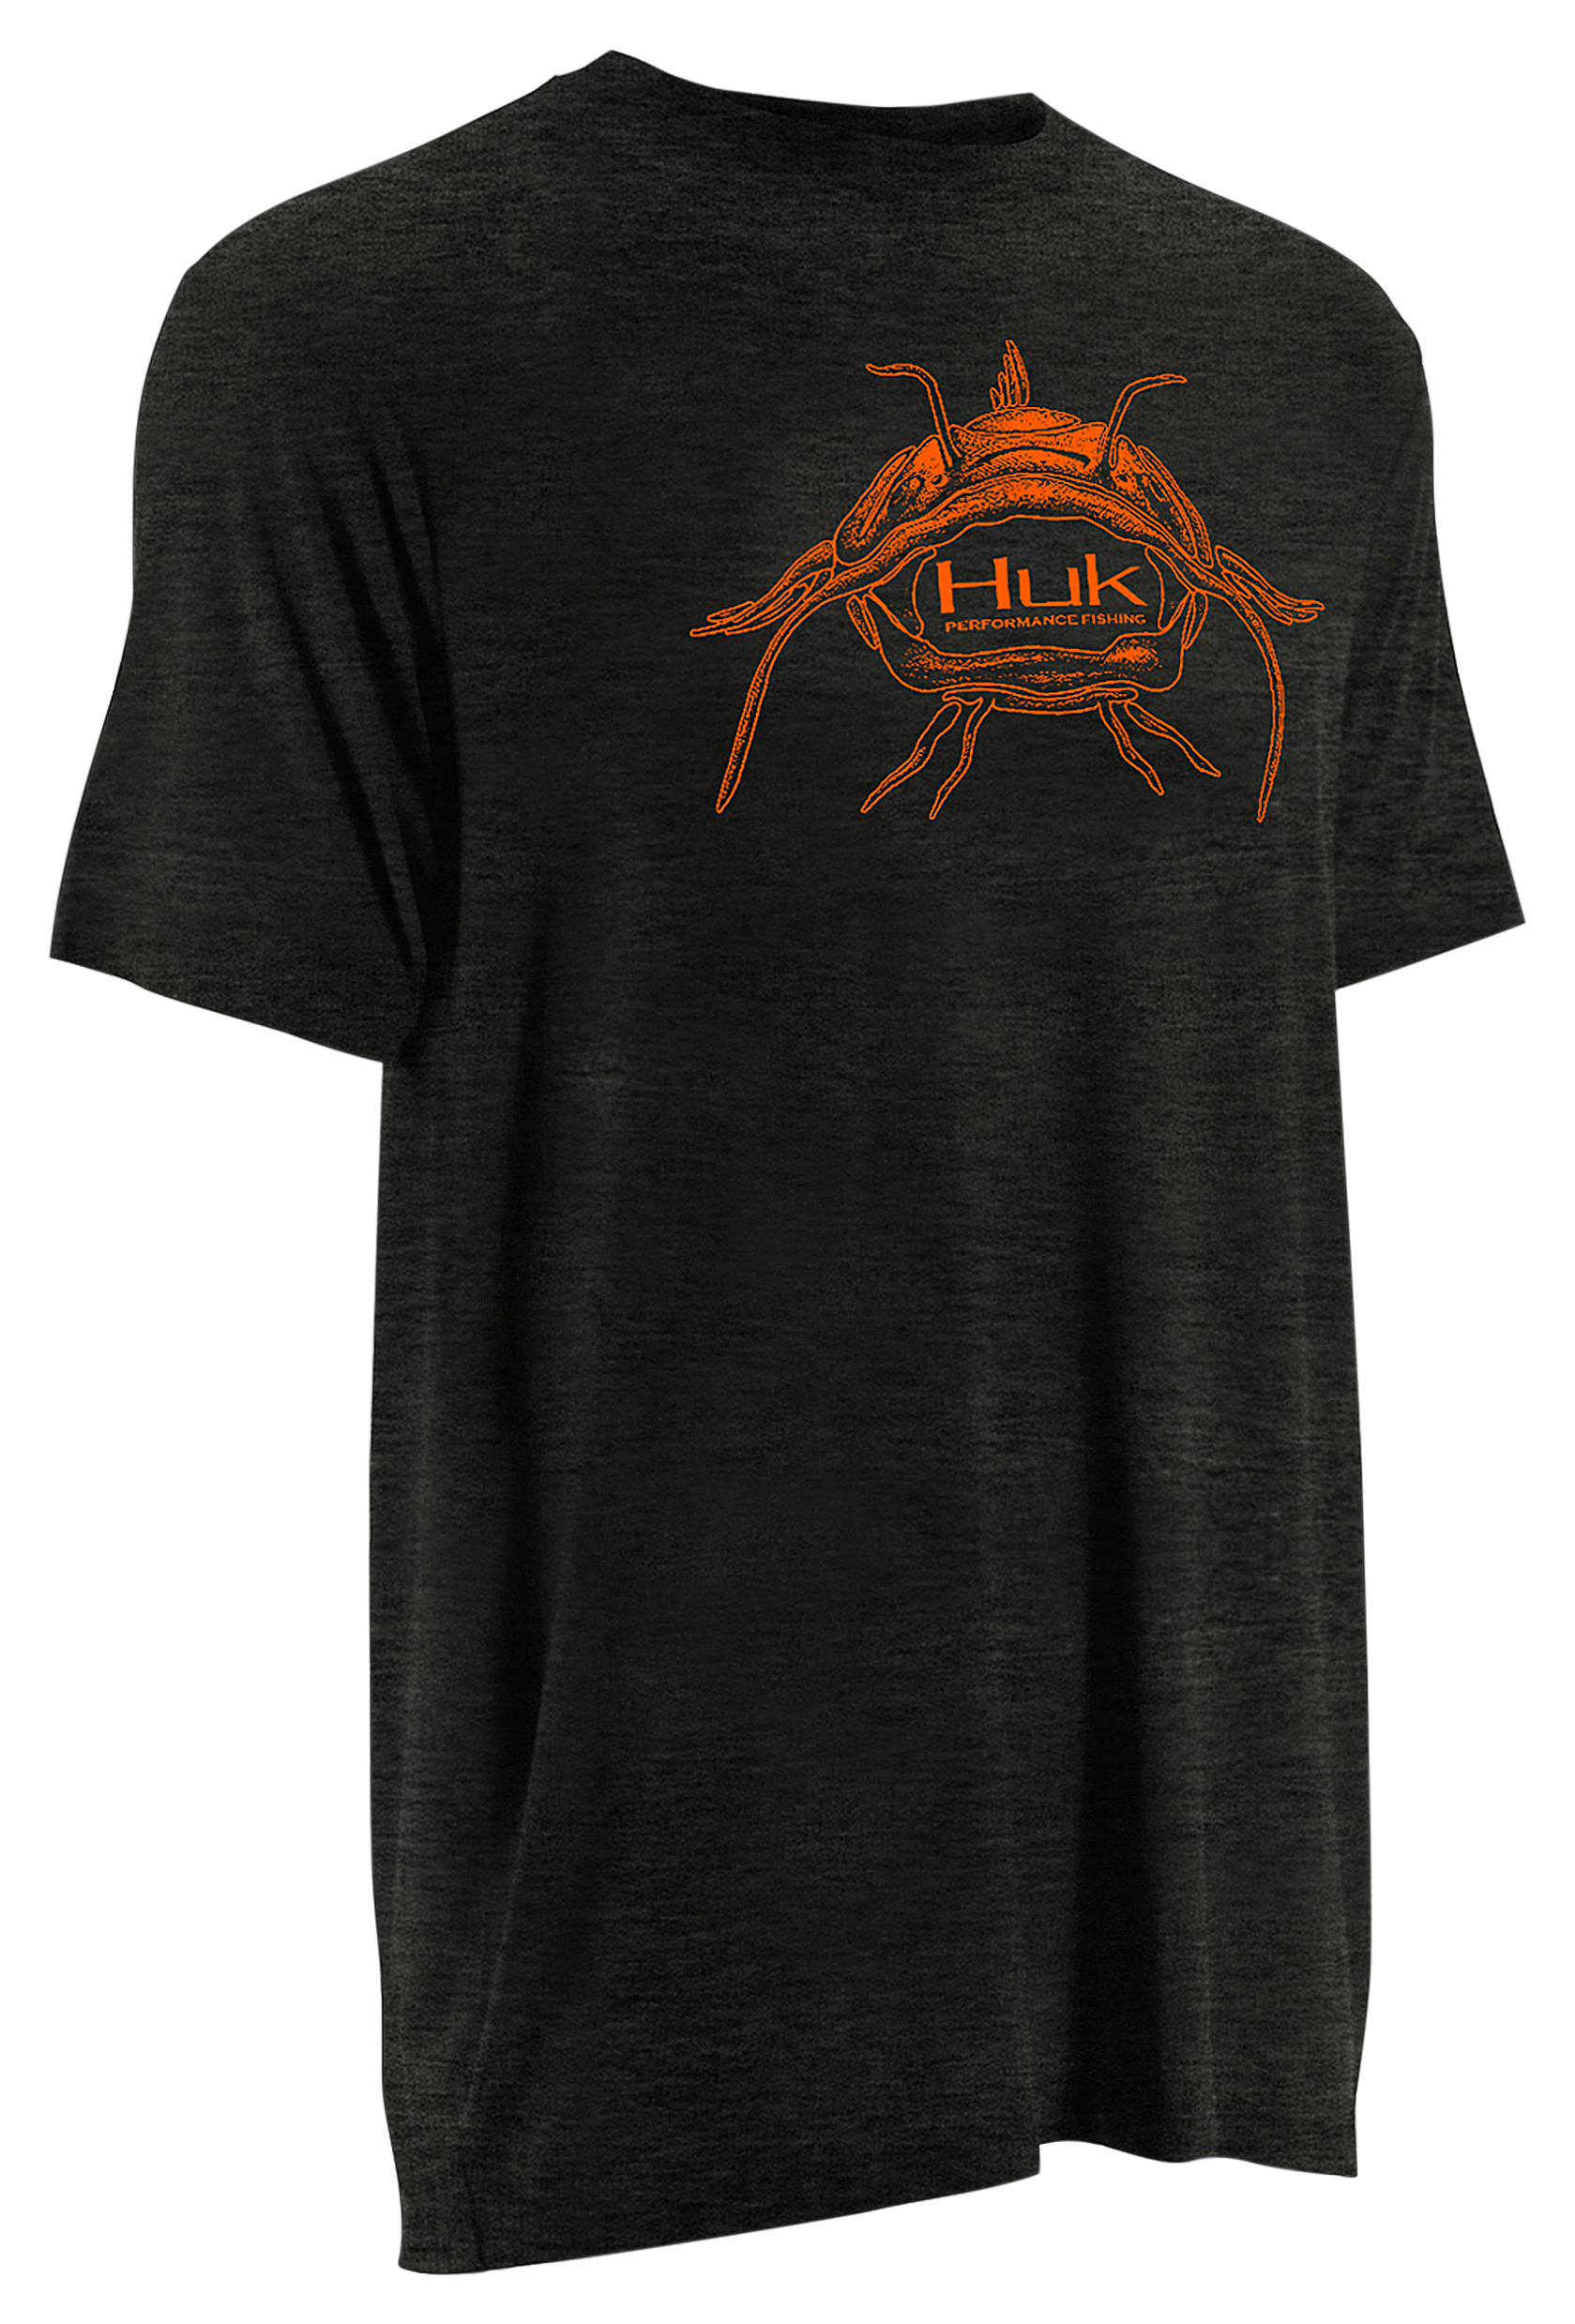 Huk Inked Catfish T-Shirt for Men